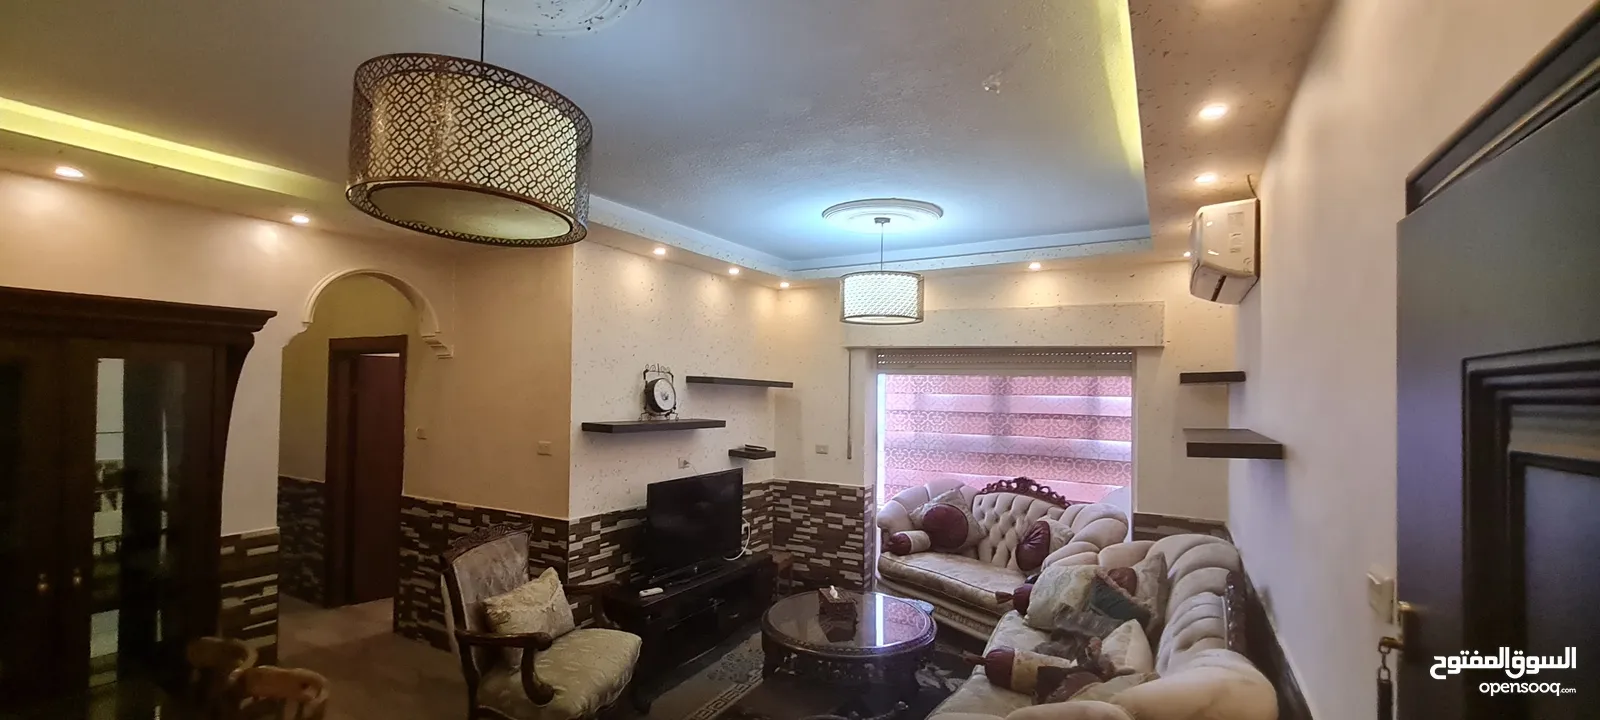 Super Deluxe fully furnished flat for Rent near Jordan University